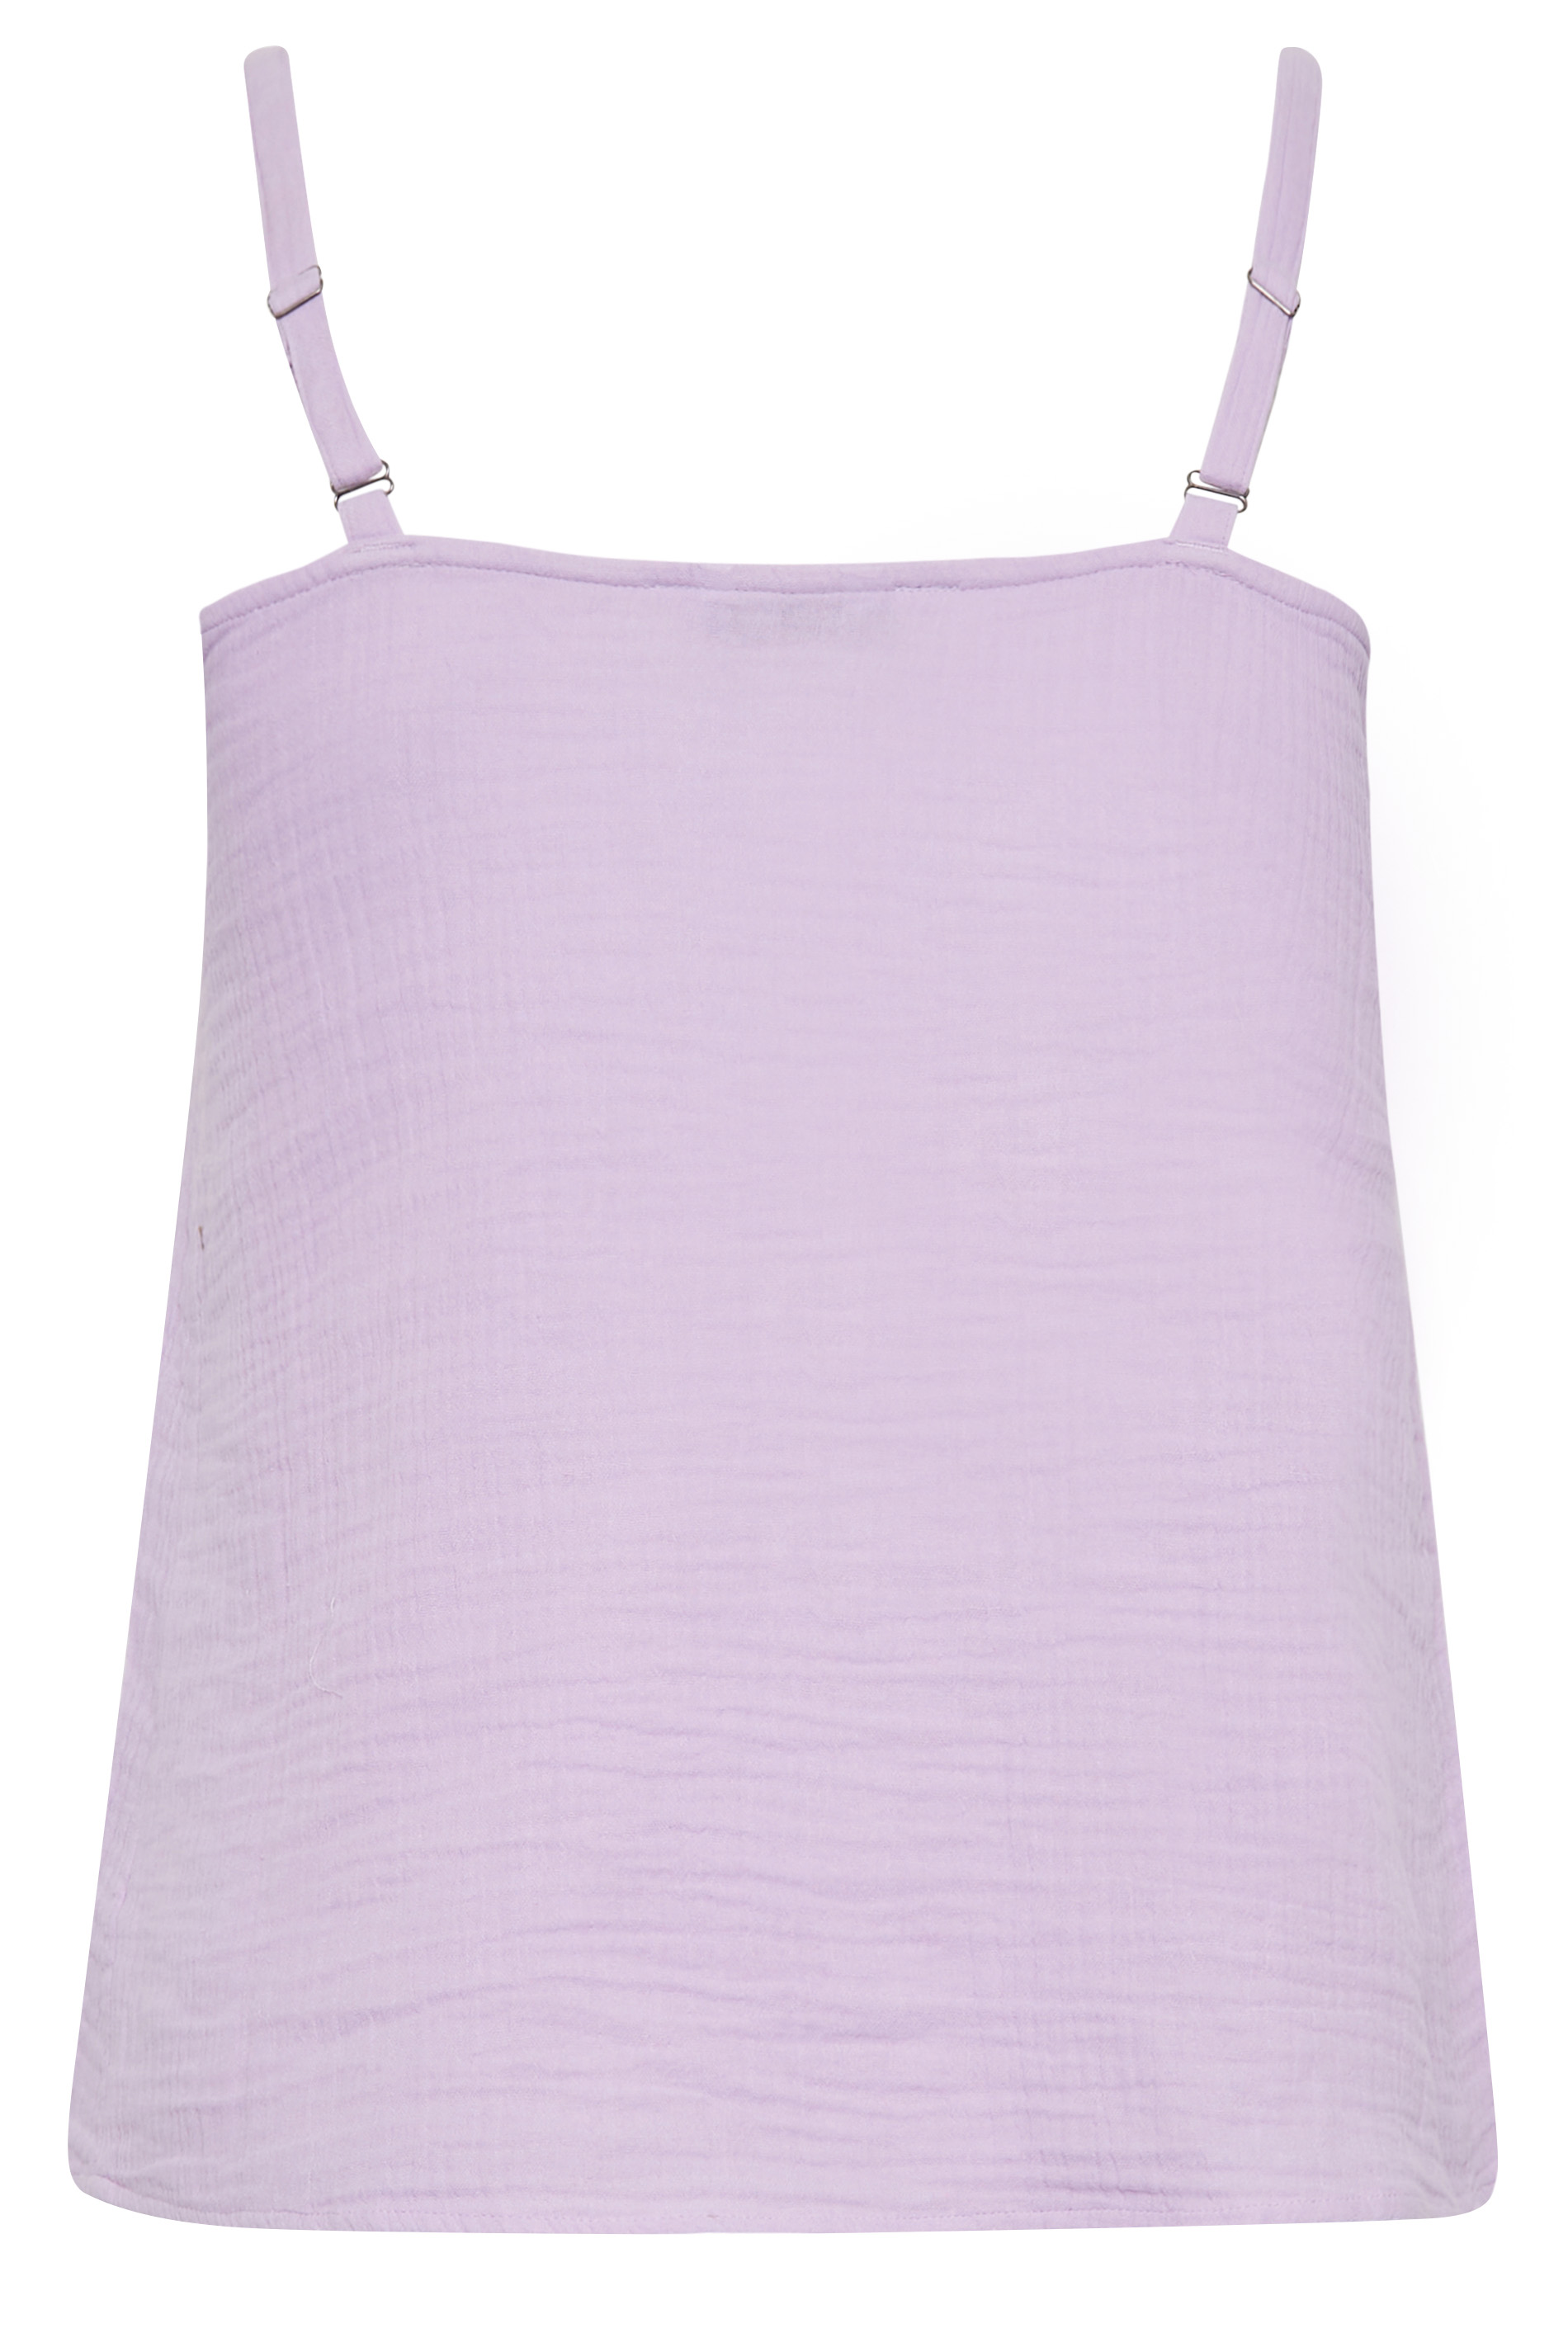 YOURS Plus Size Lilac Purple Button Cami Vest Top | Yours Clothing